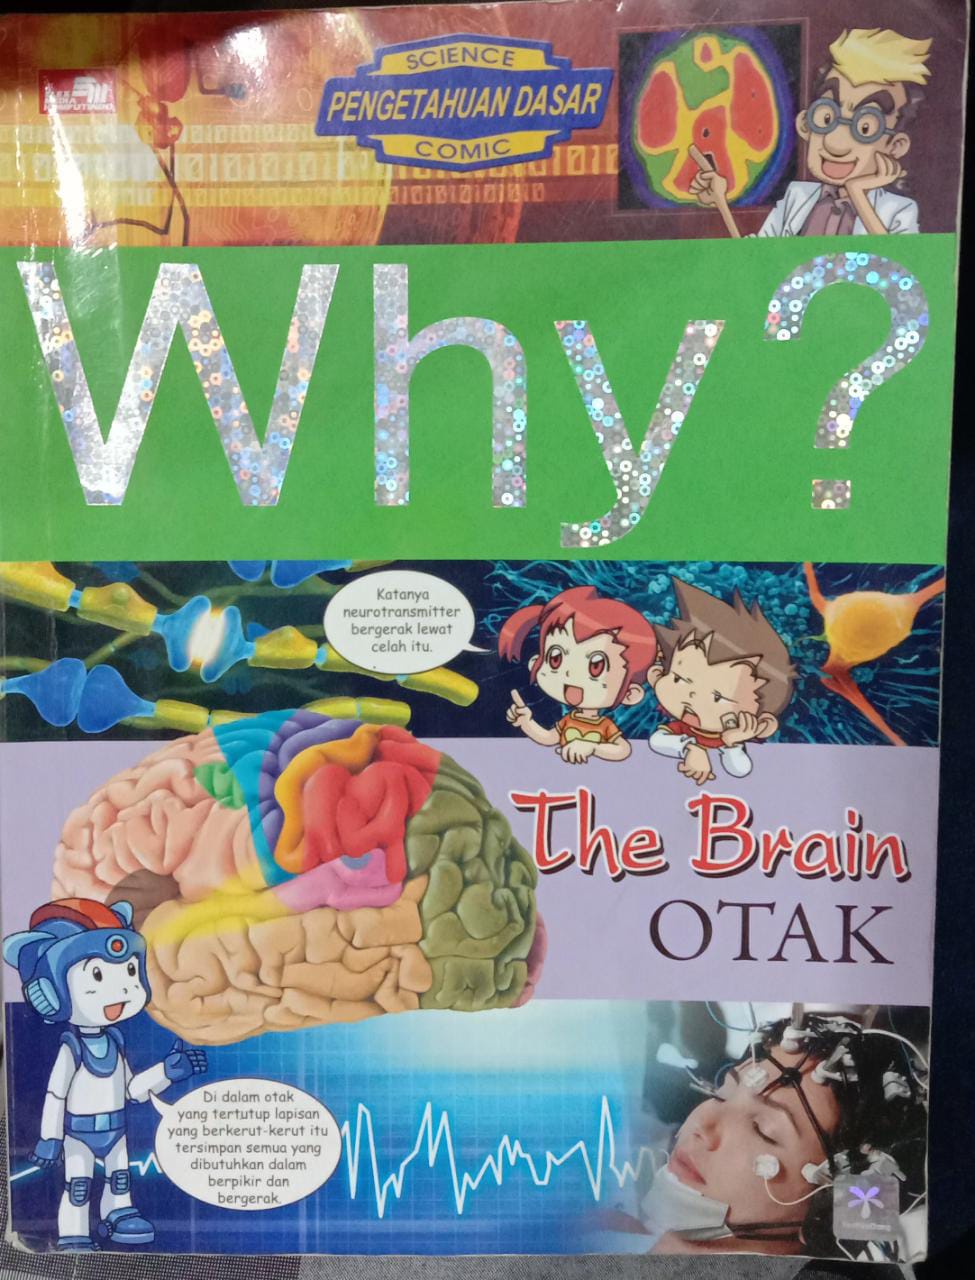 Why the brain